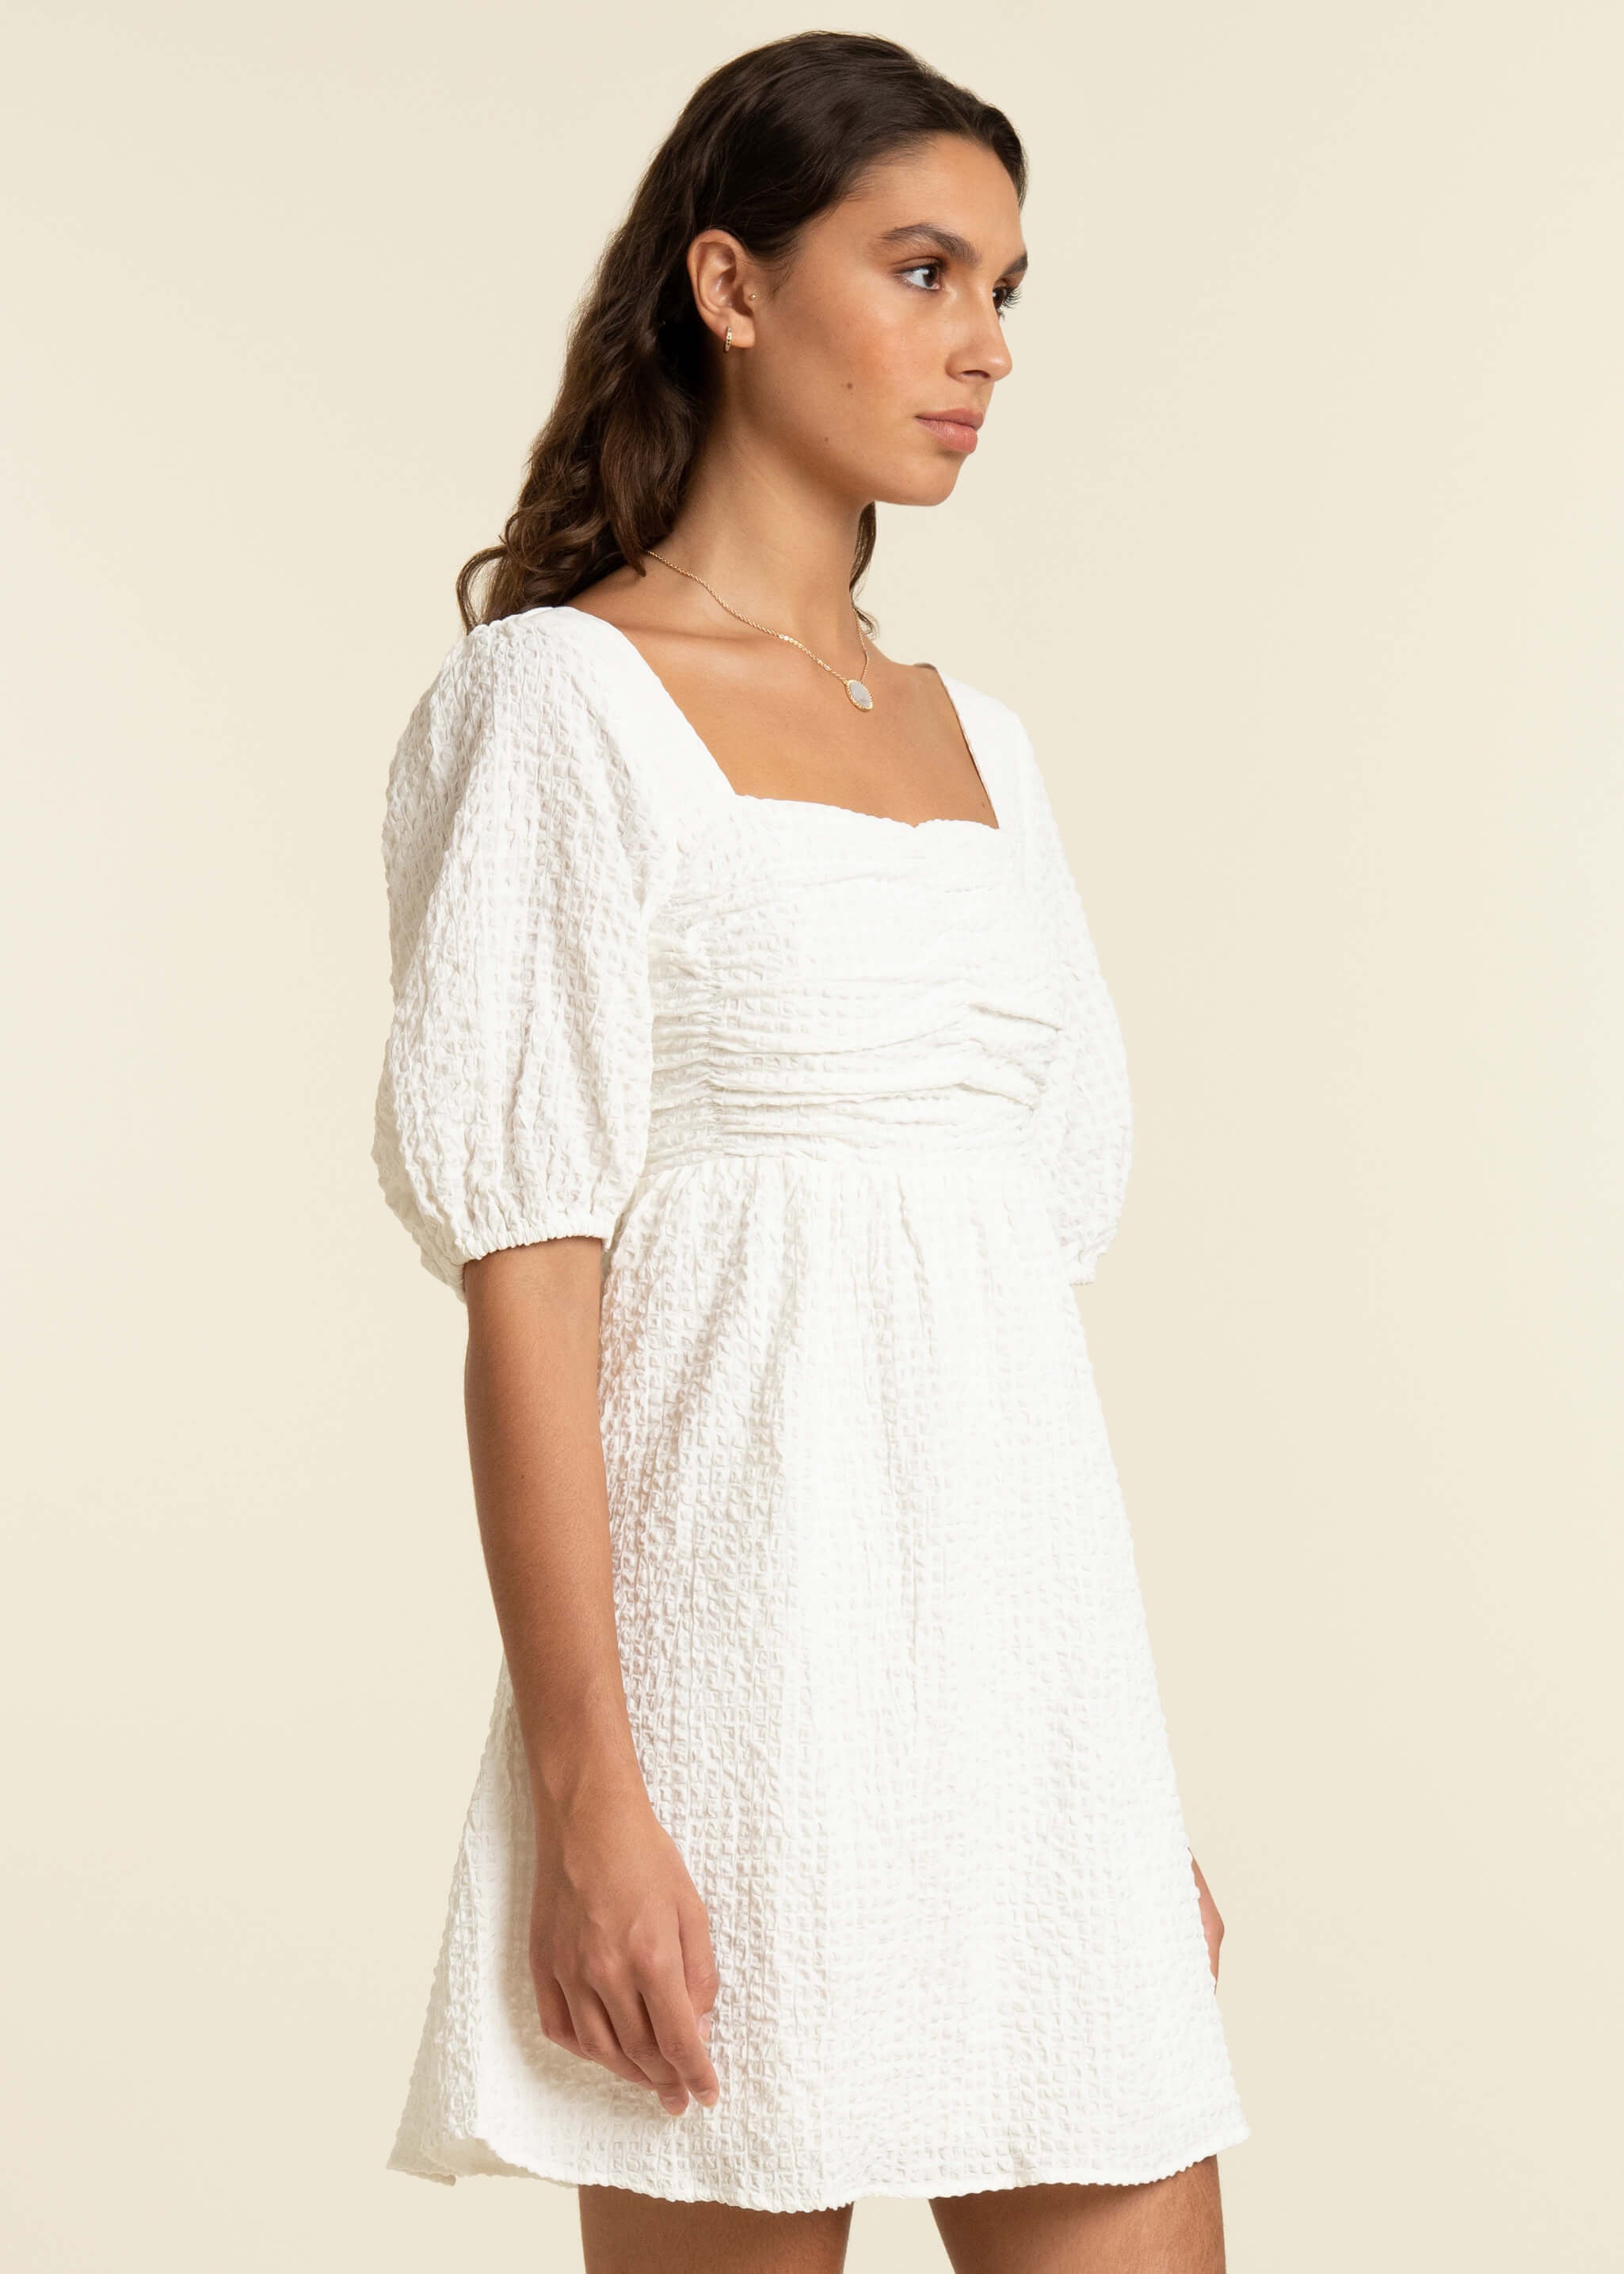 EMY white dress